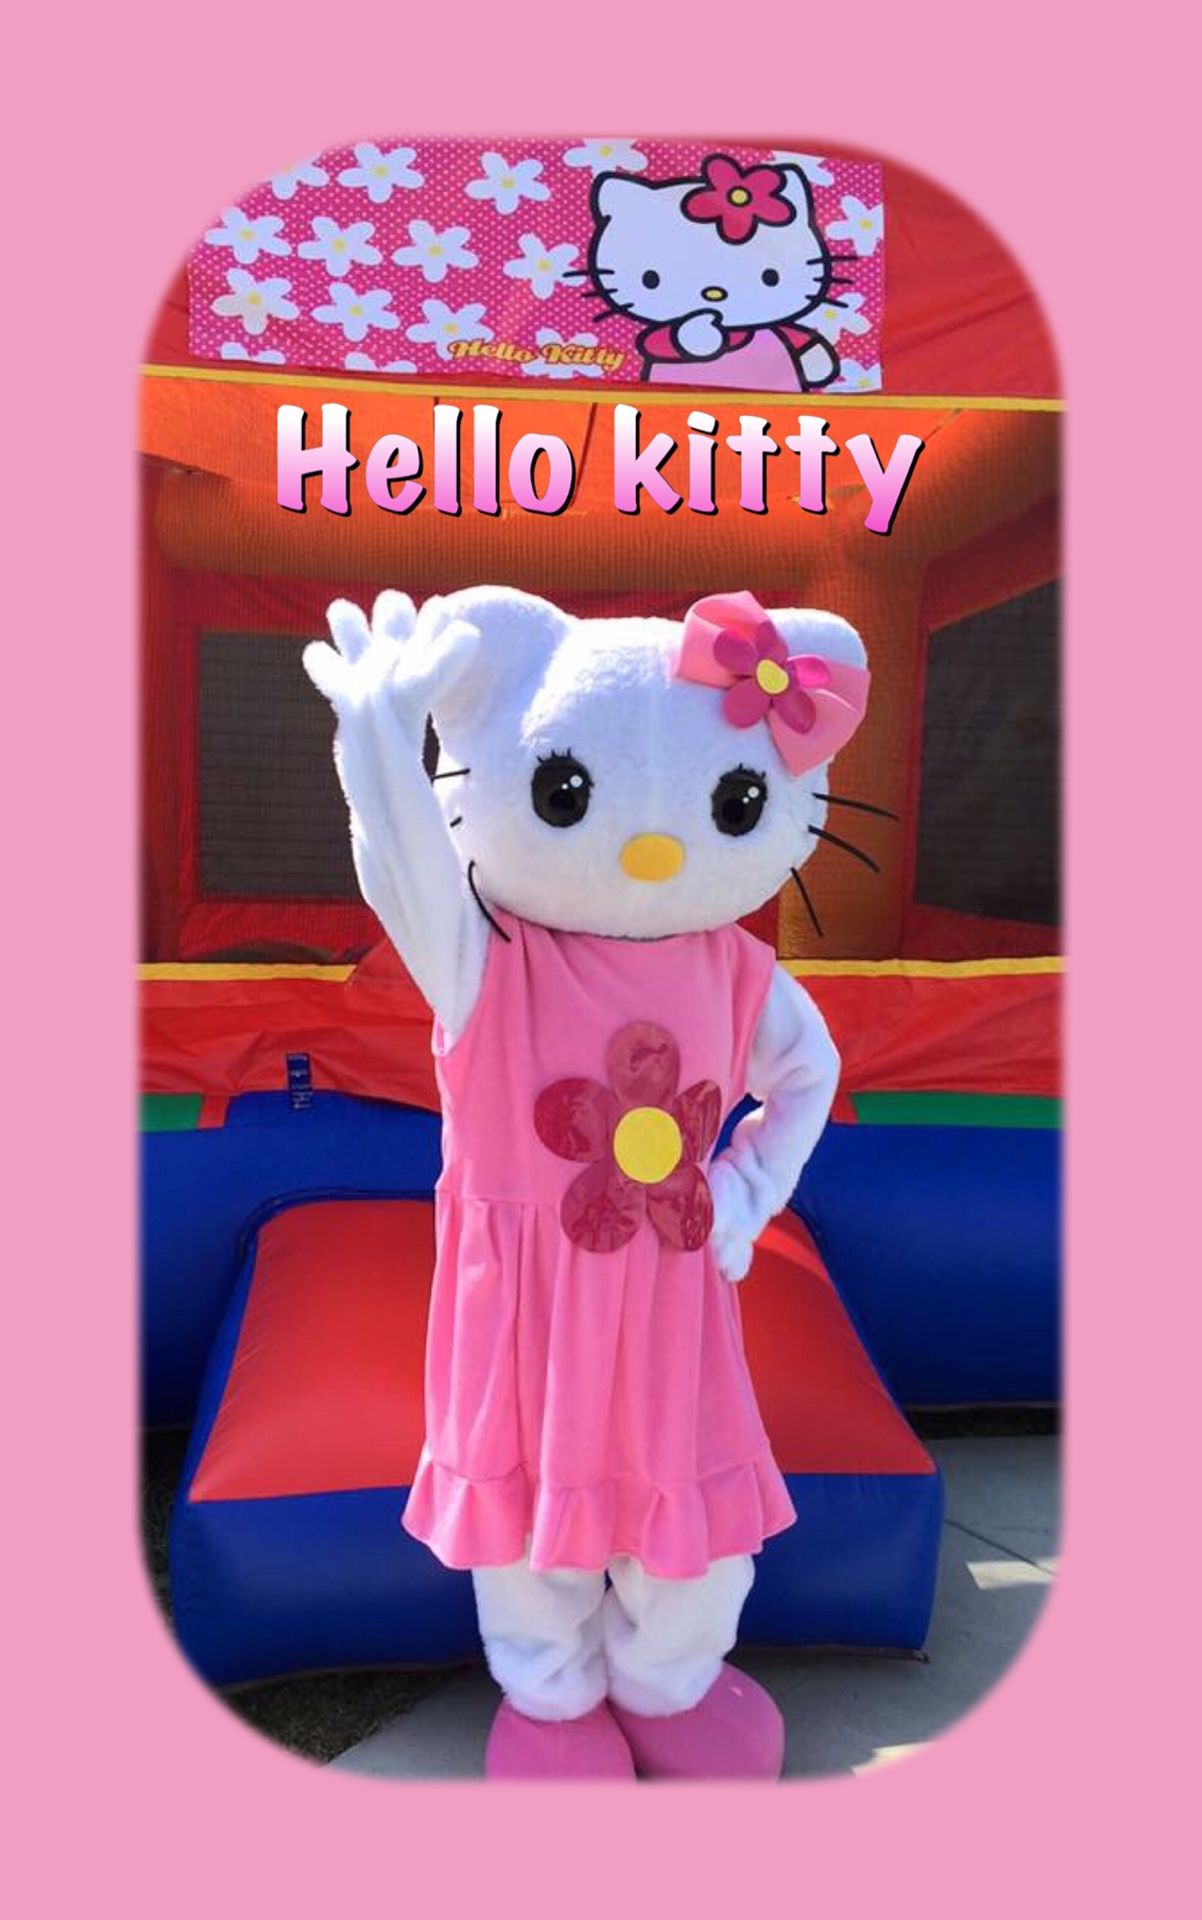 Beautiful Hello kitty costume for sale